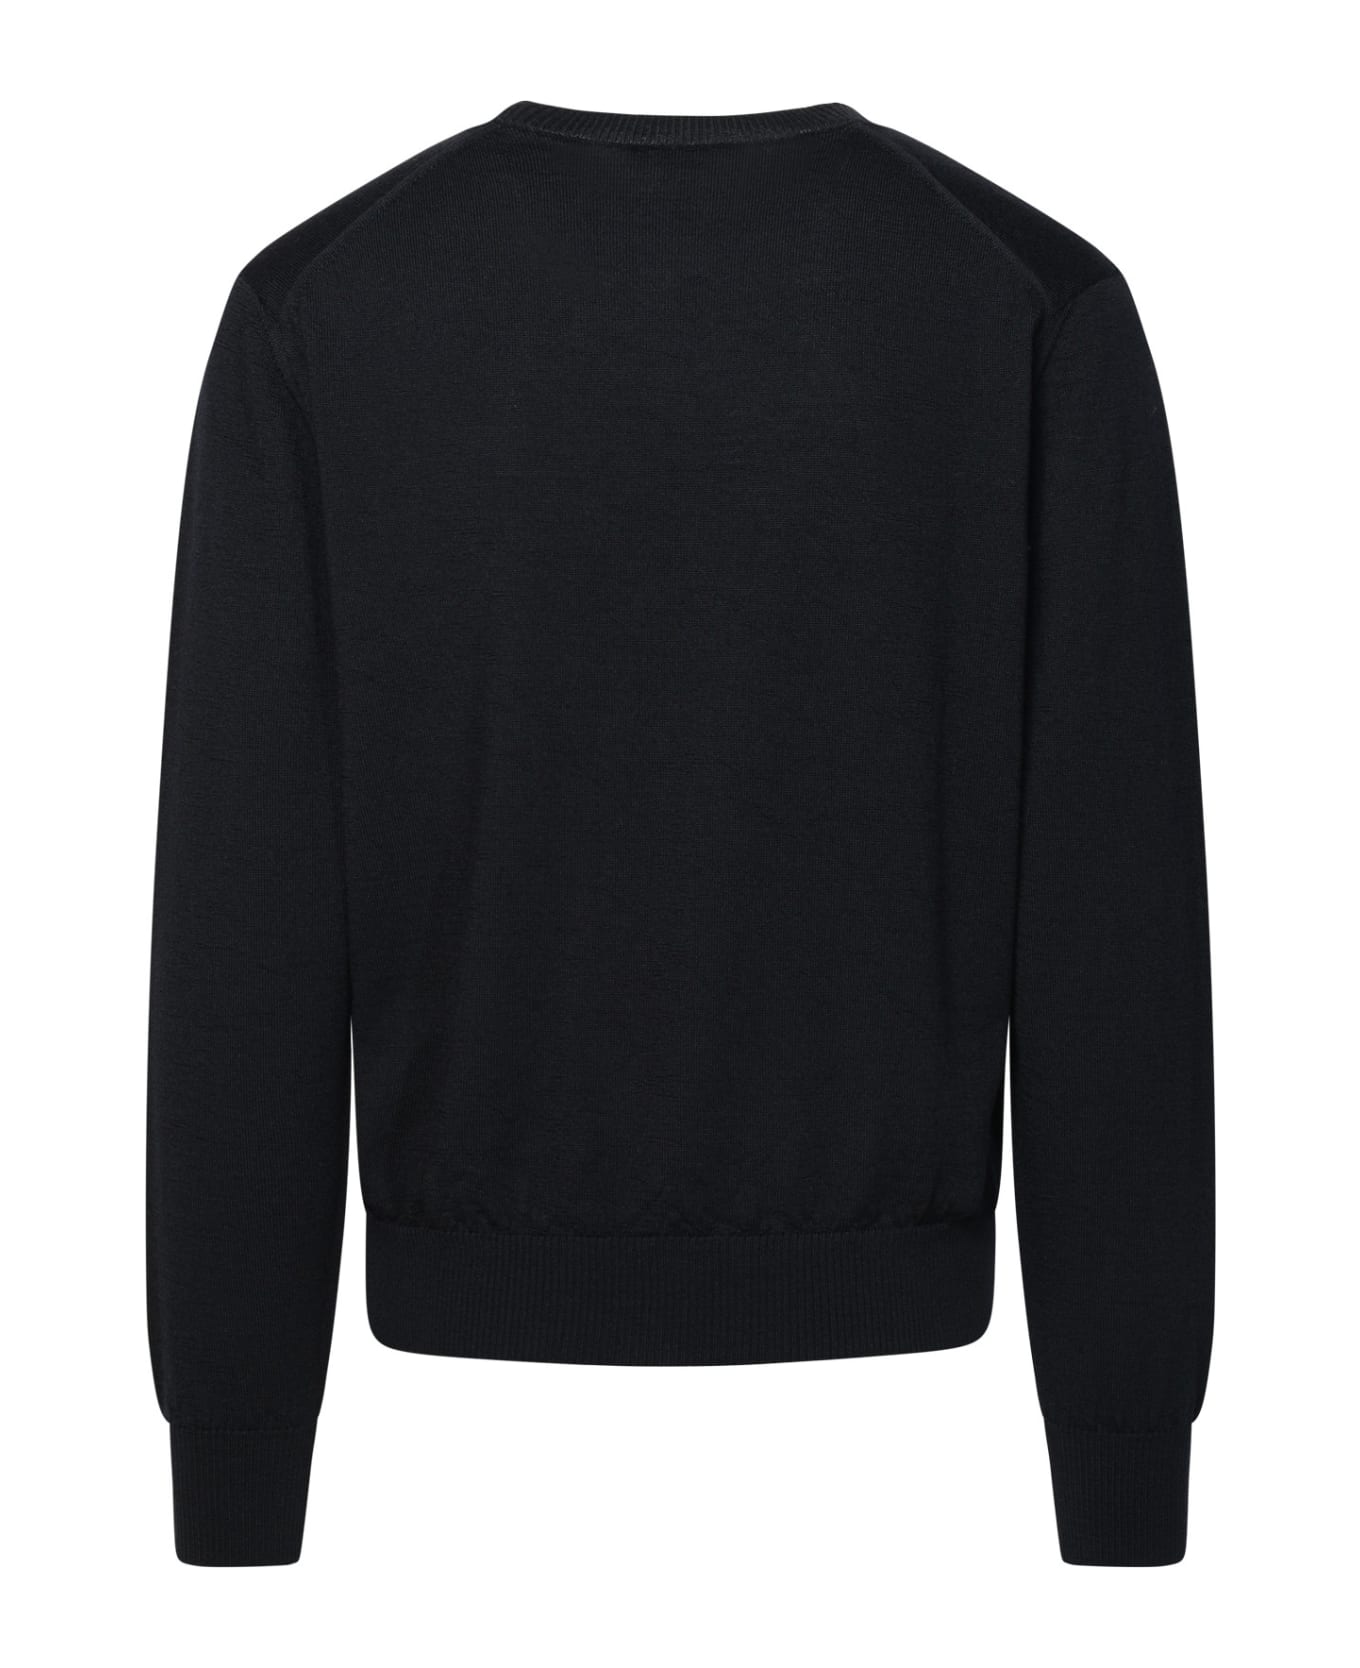 Ami Alexandre Mattiussi Black Merino Wool Sweater - Black ニットウェア